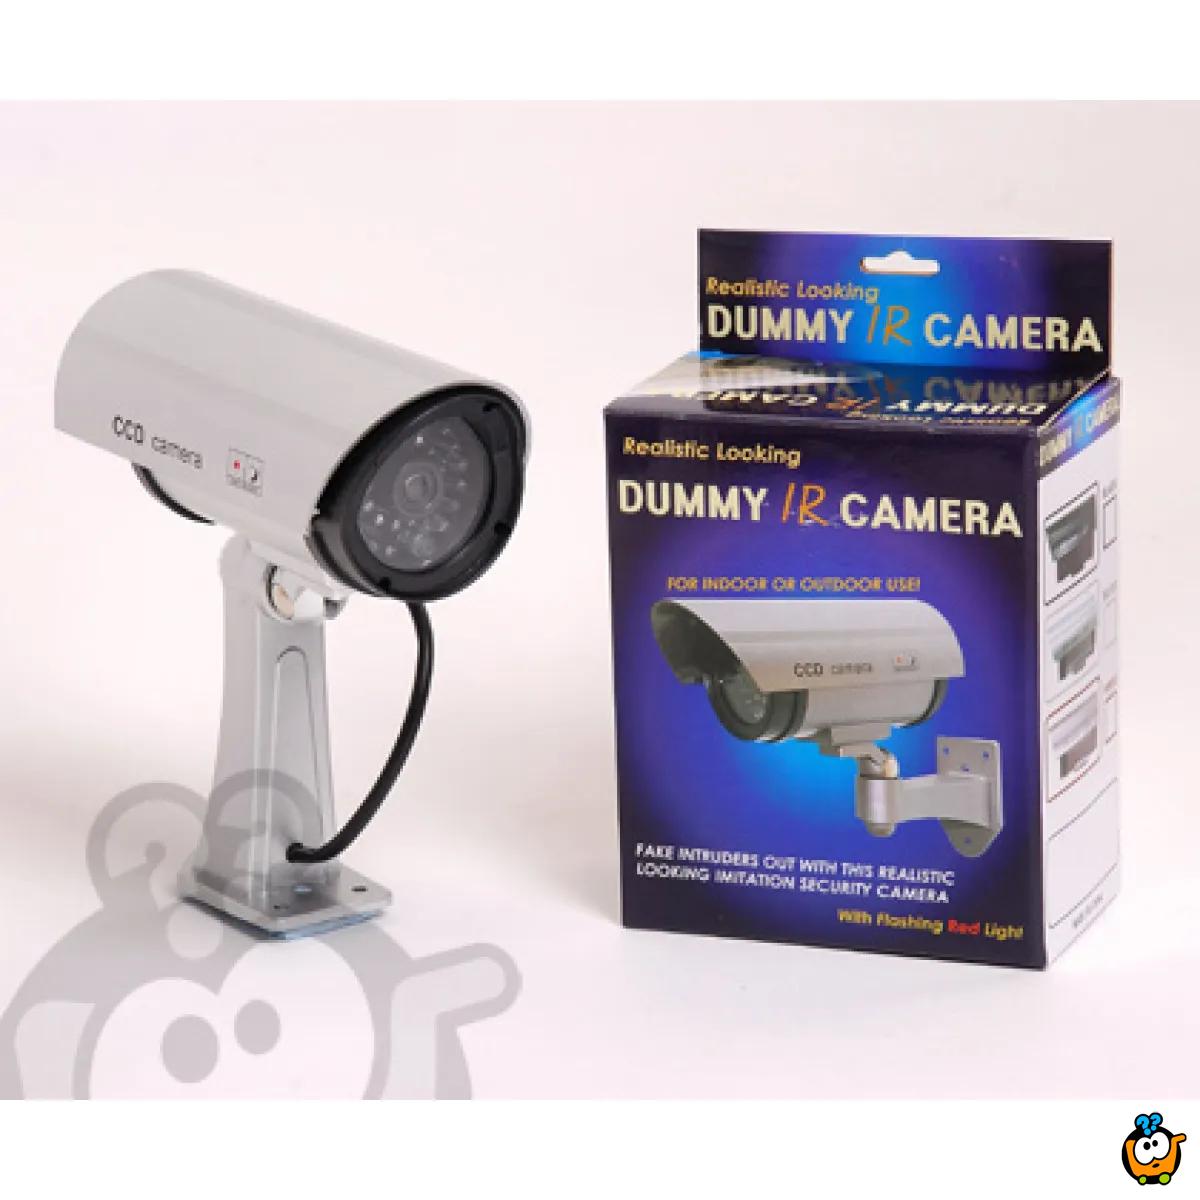 Lažna sigurnosna kamera za video nadzor